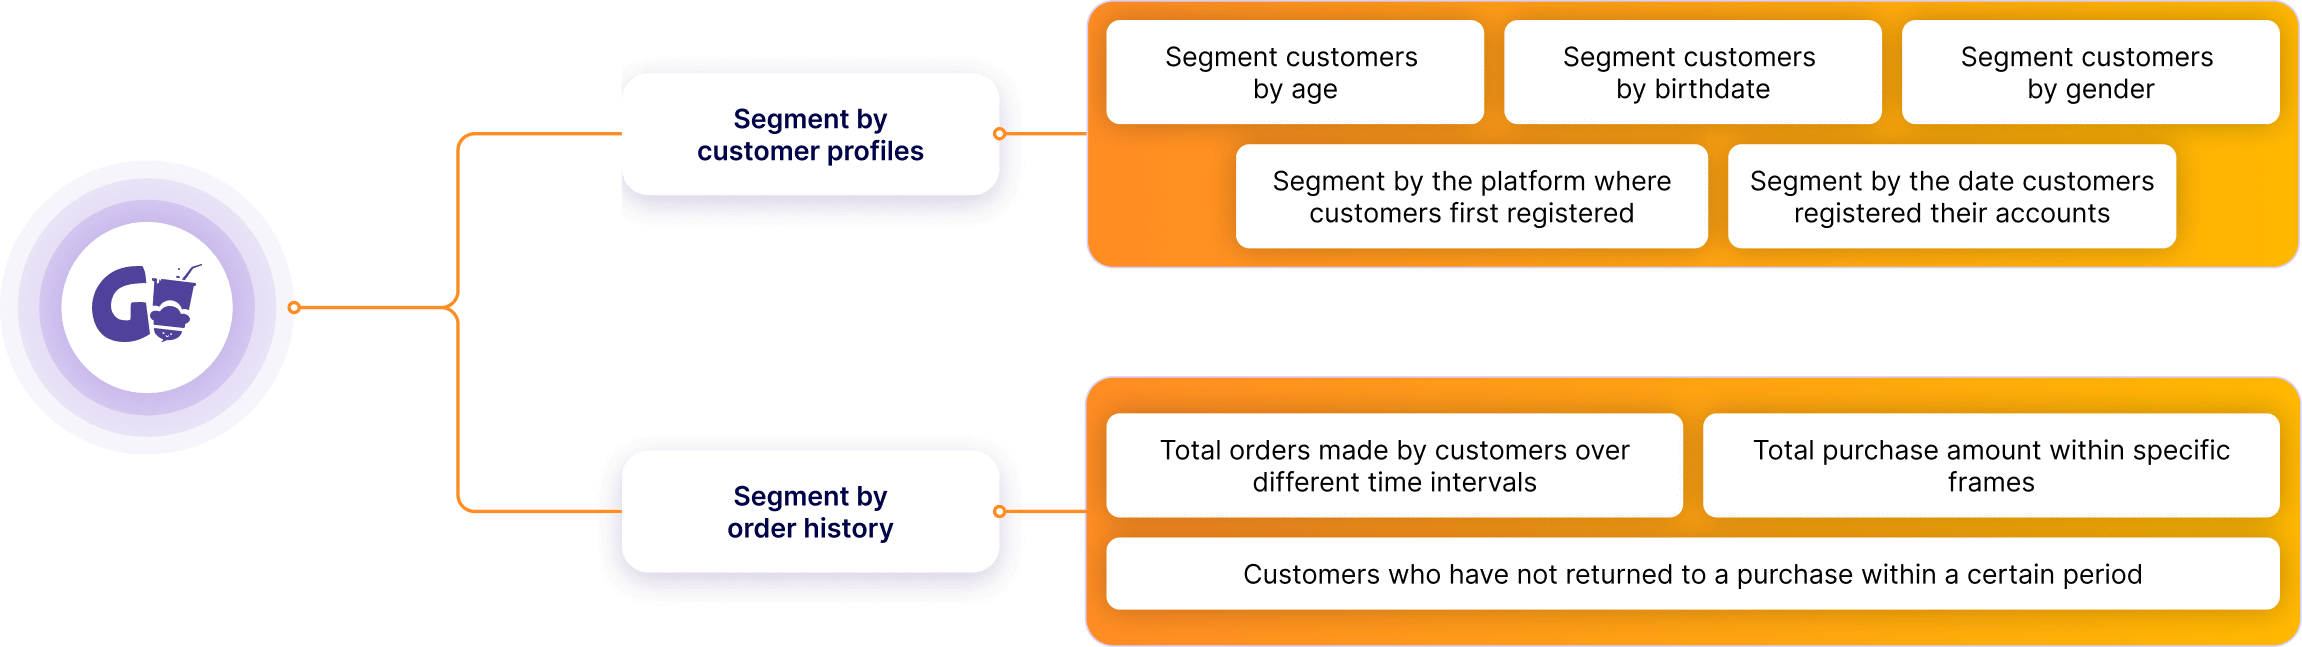 Freedom to segment customers, flexibly manage